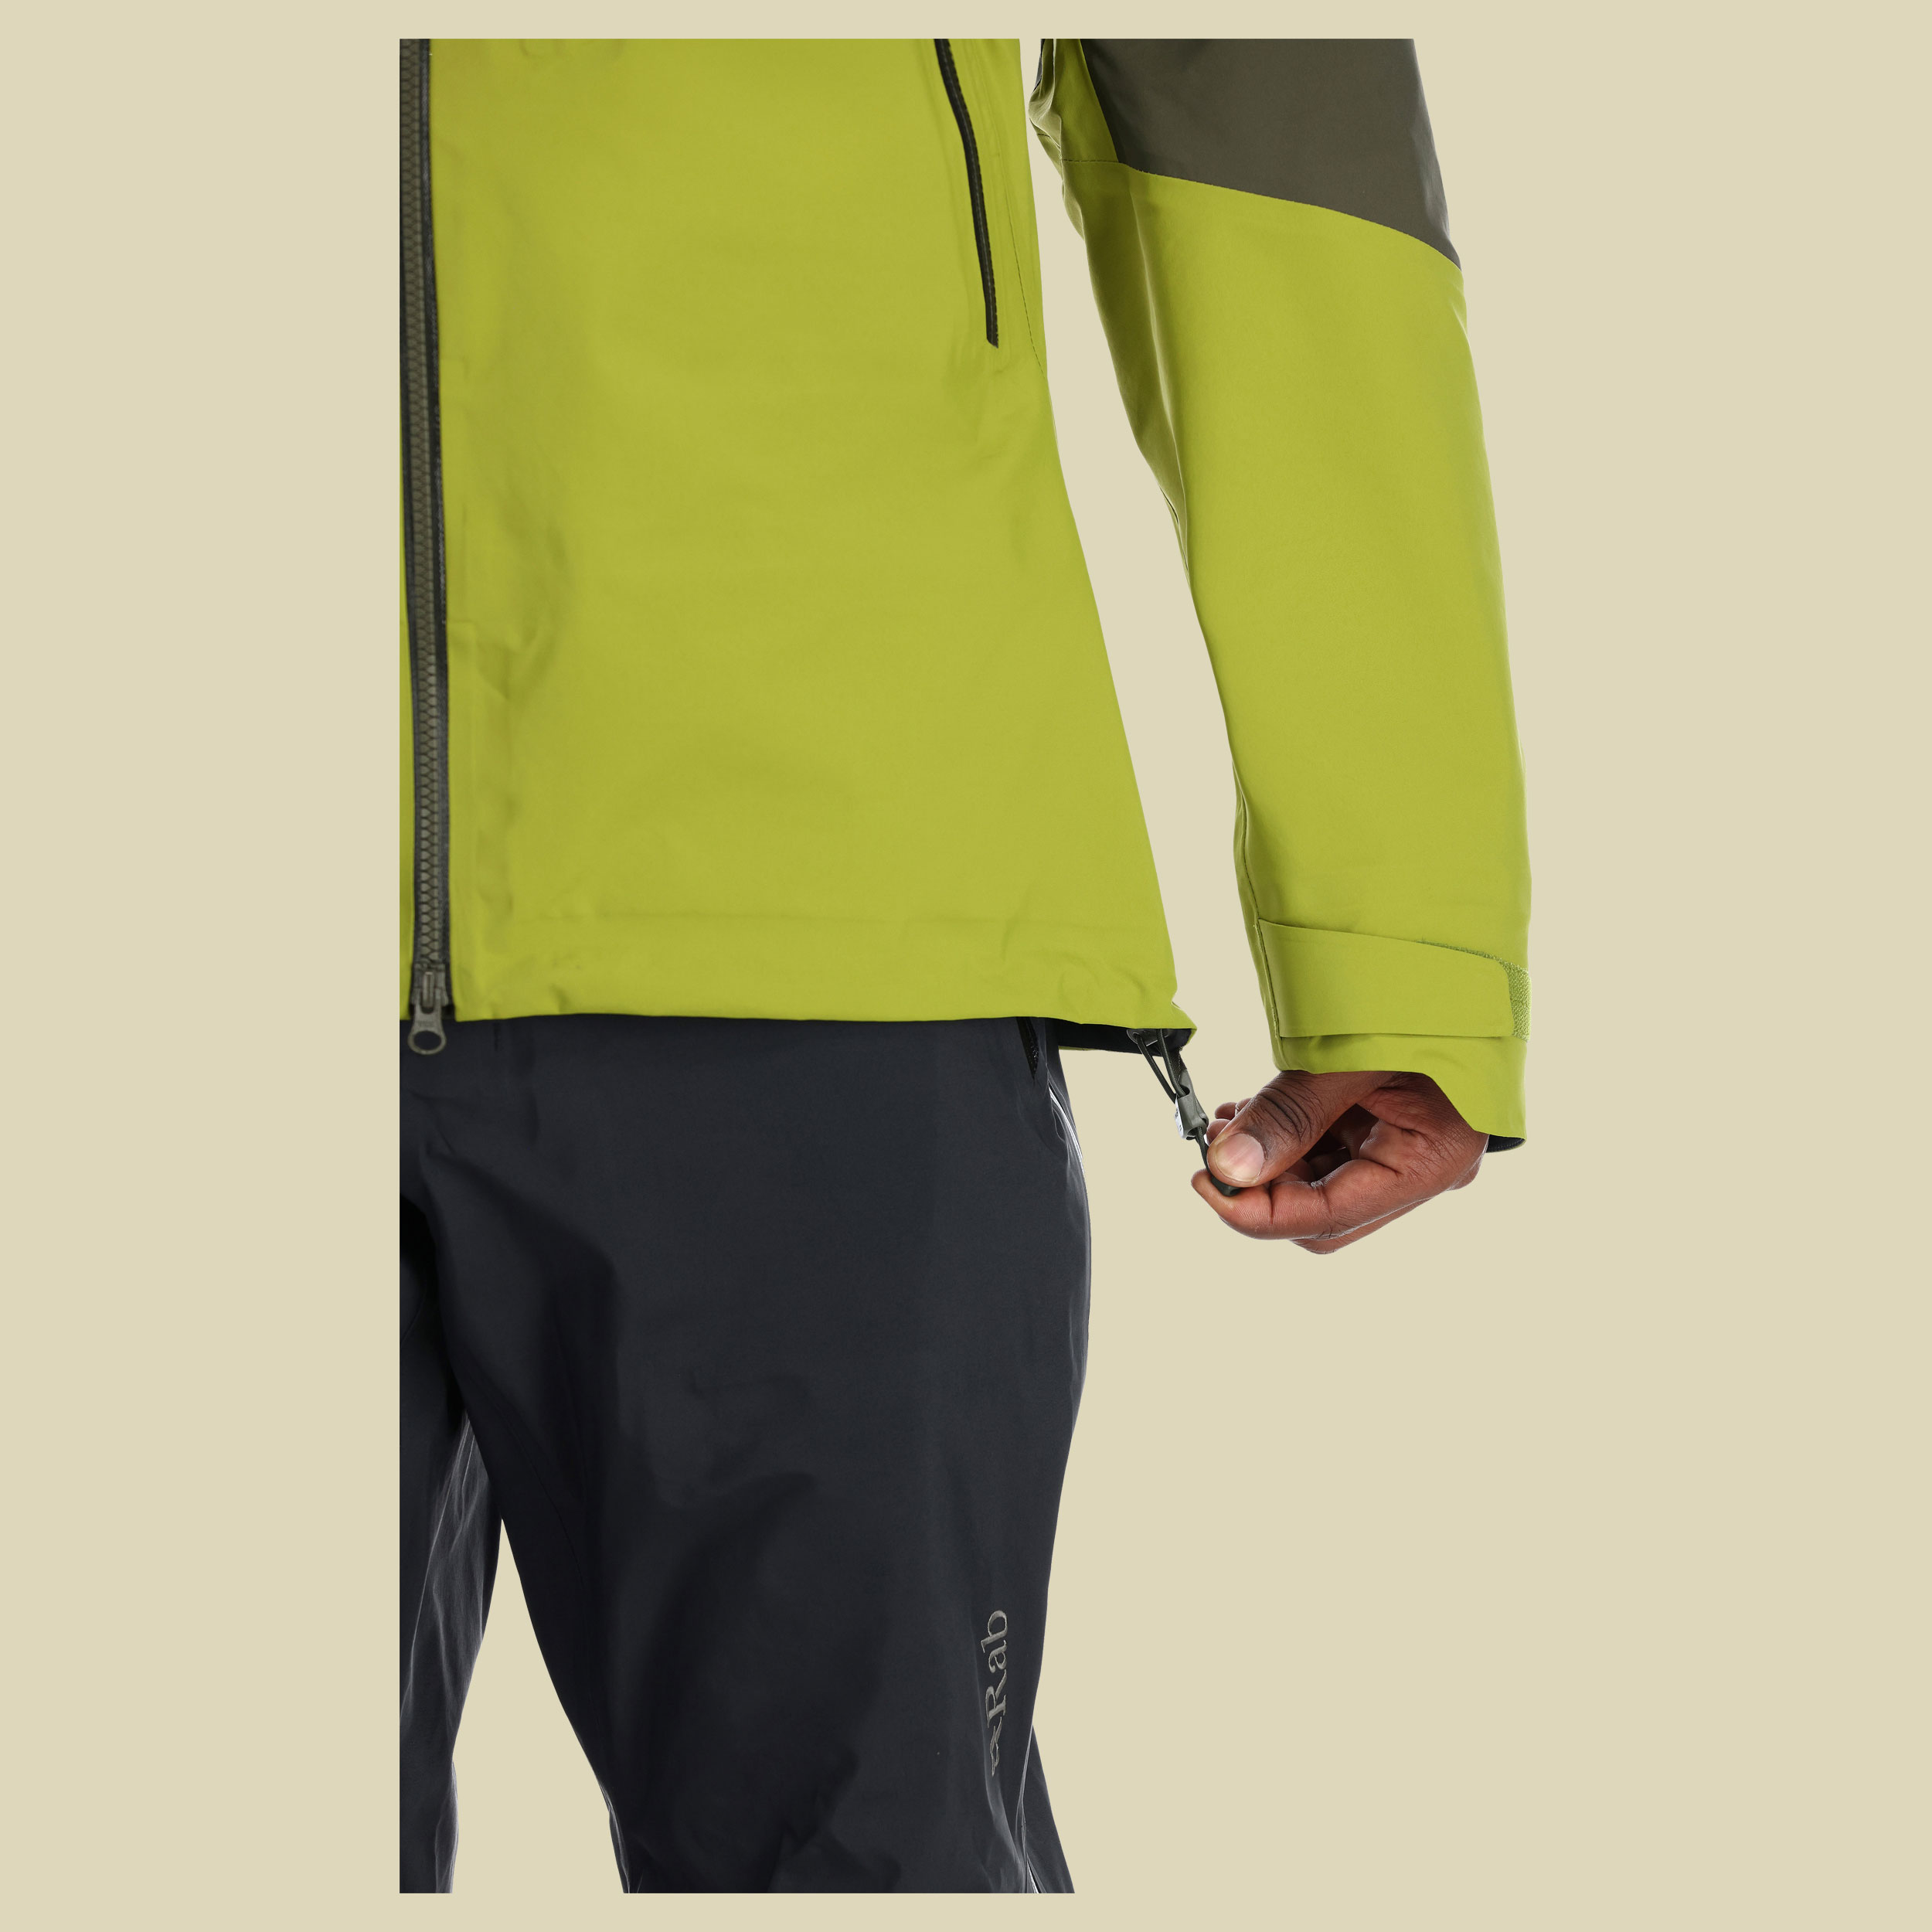 Zanskar GTX Jacket Men Größe XL Farbe army/aspen green